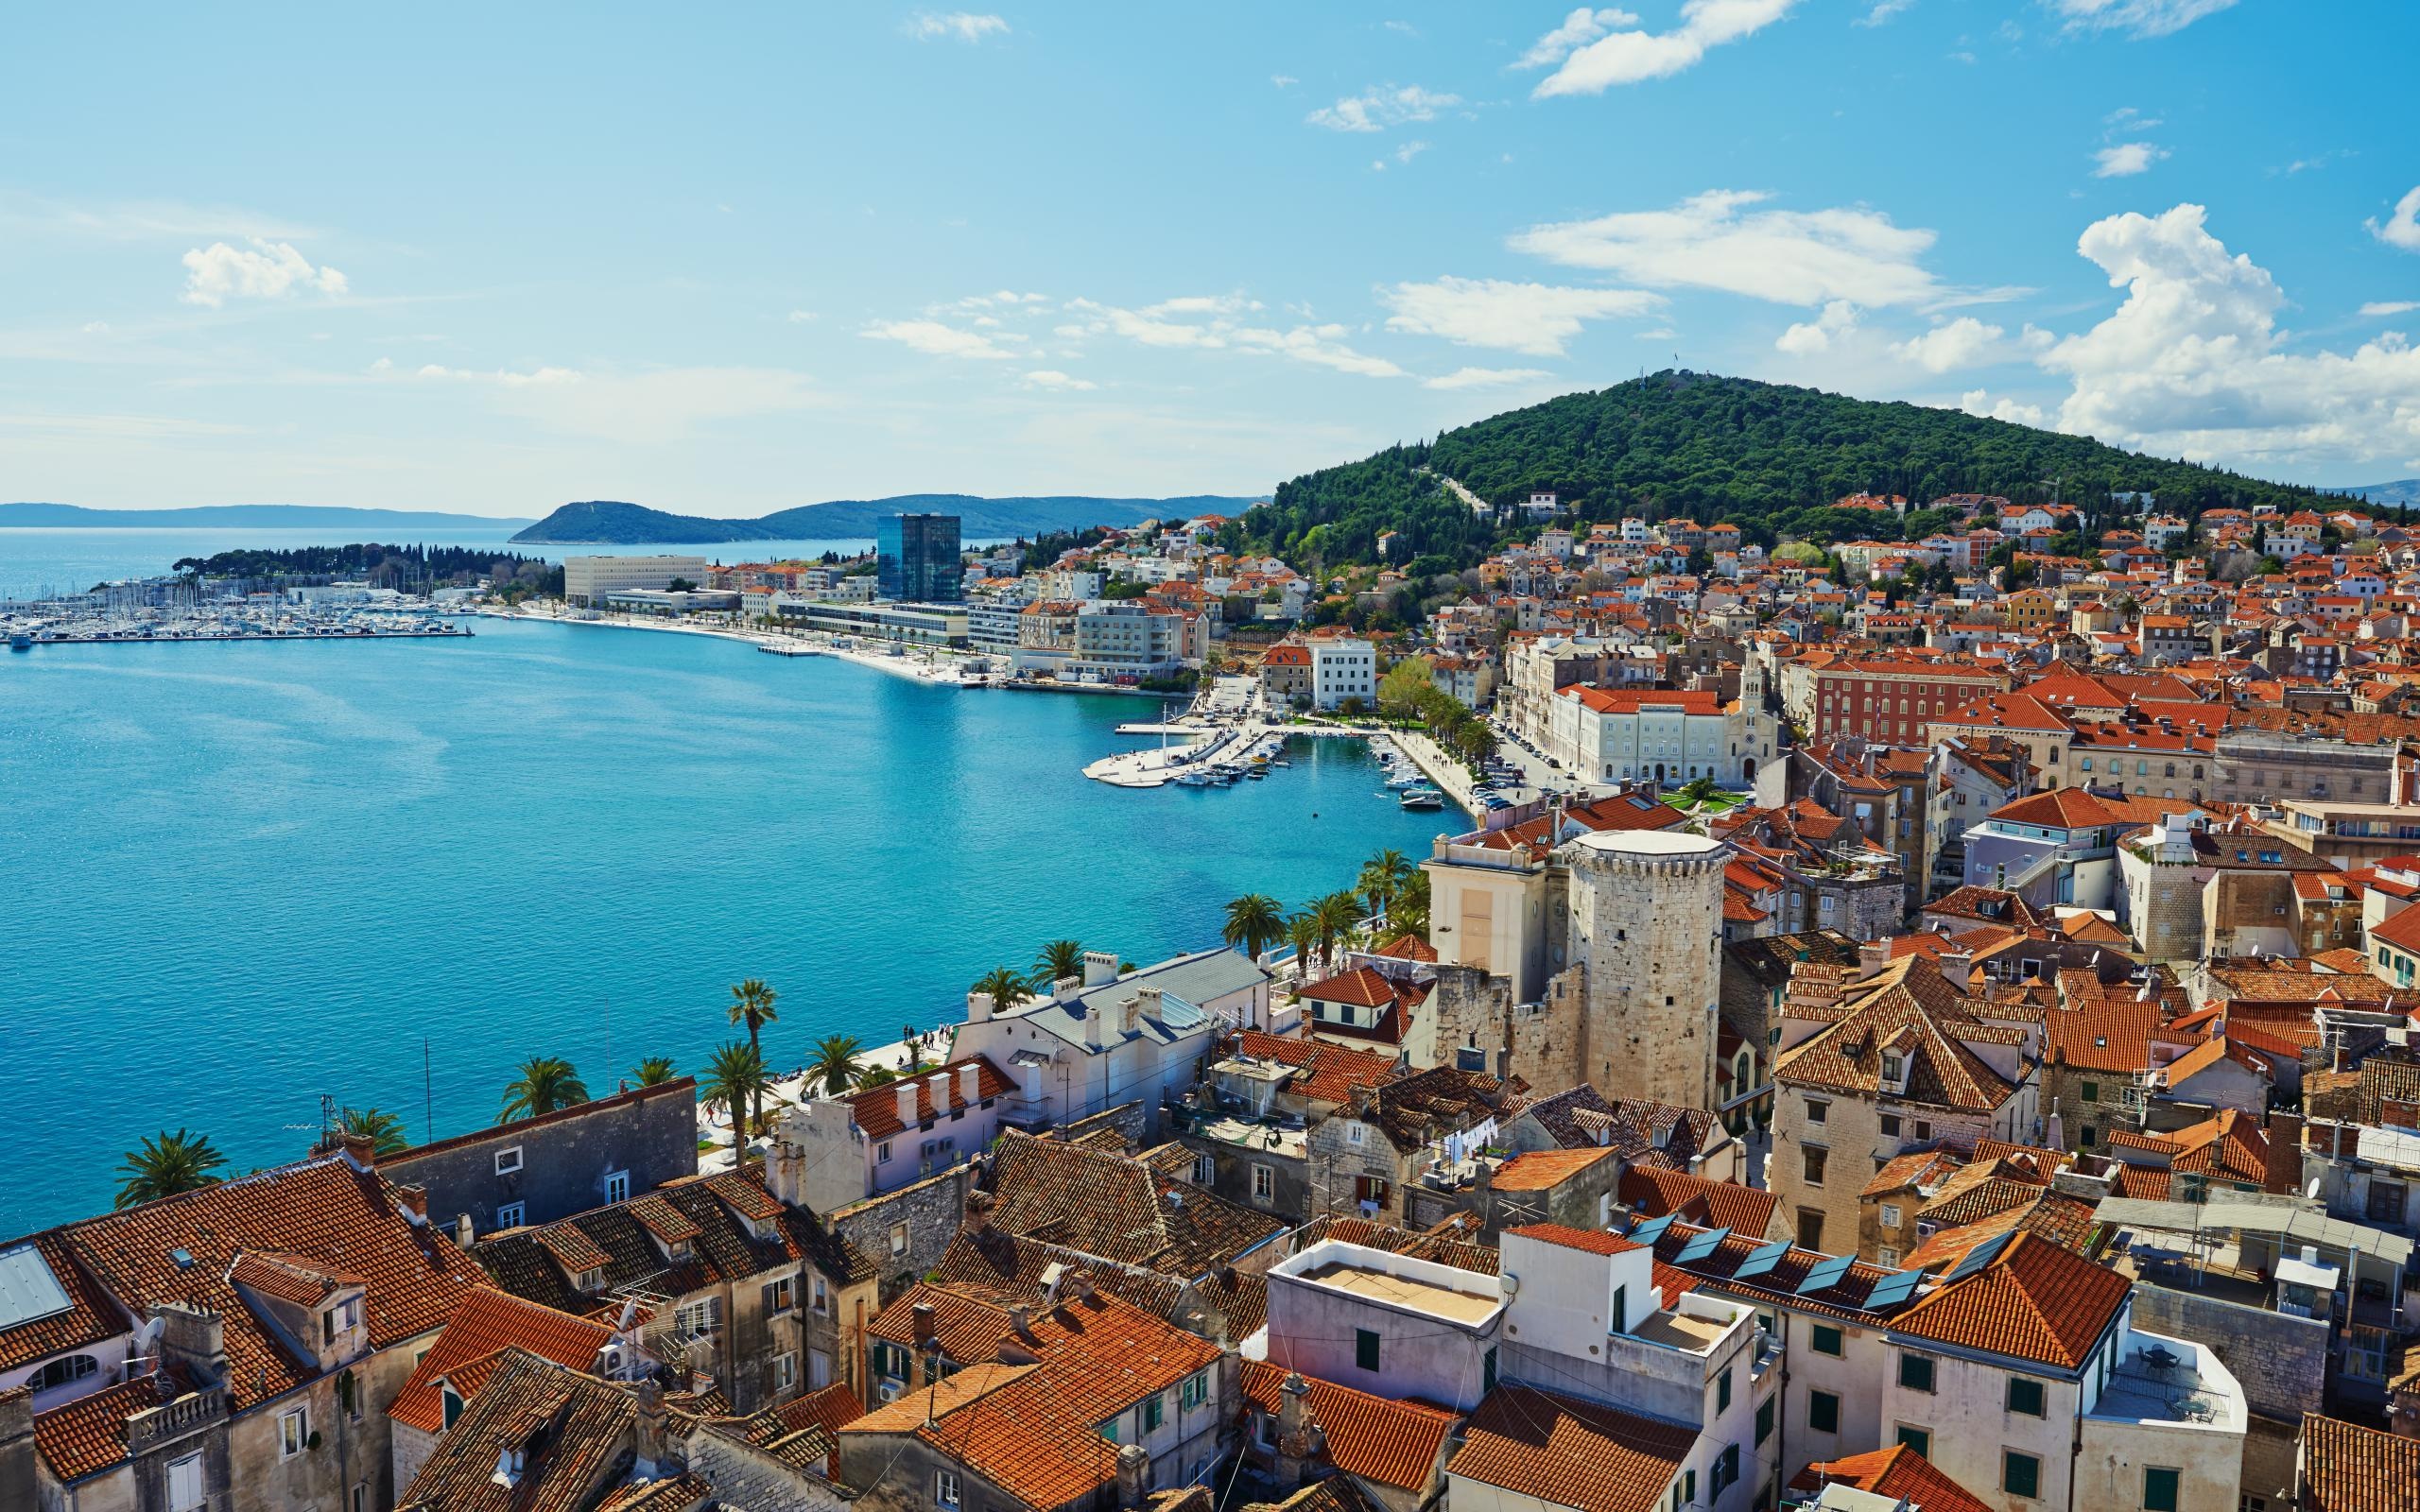 Croatia: Split, The largest city on the Croatian coast. 2560x1600 HD Wallpaper.